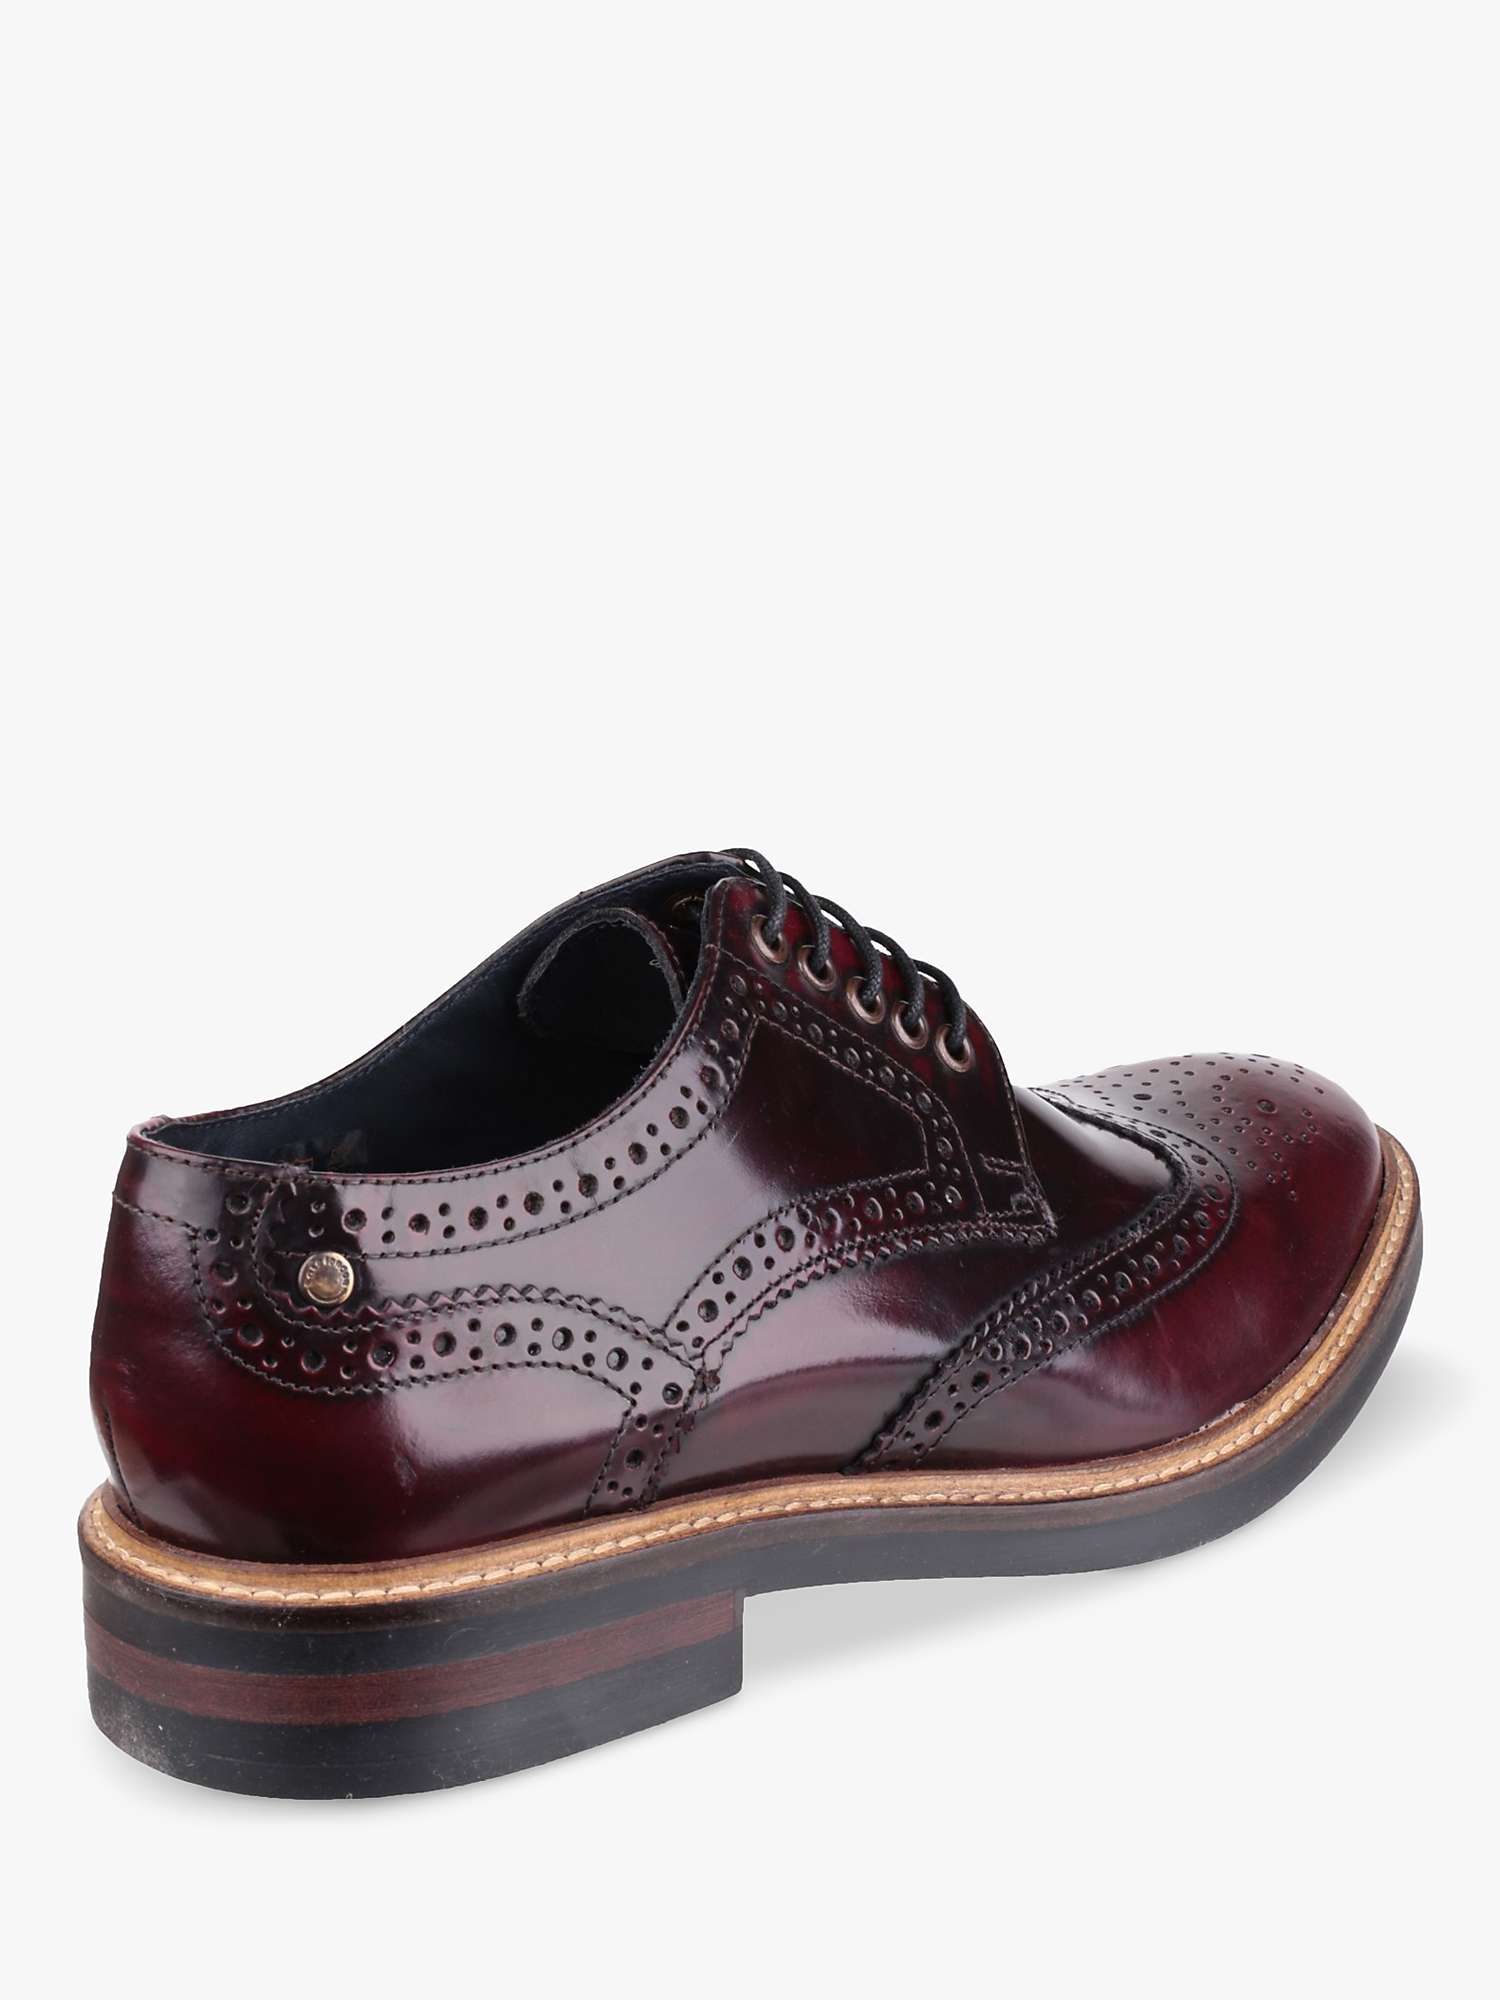 Buy Base London Brogue Derby Shoes Online at johnlewis.com